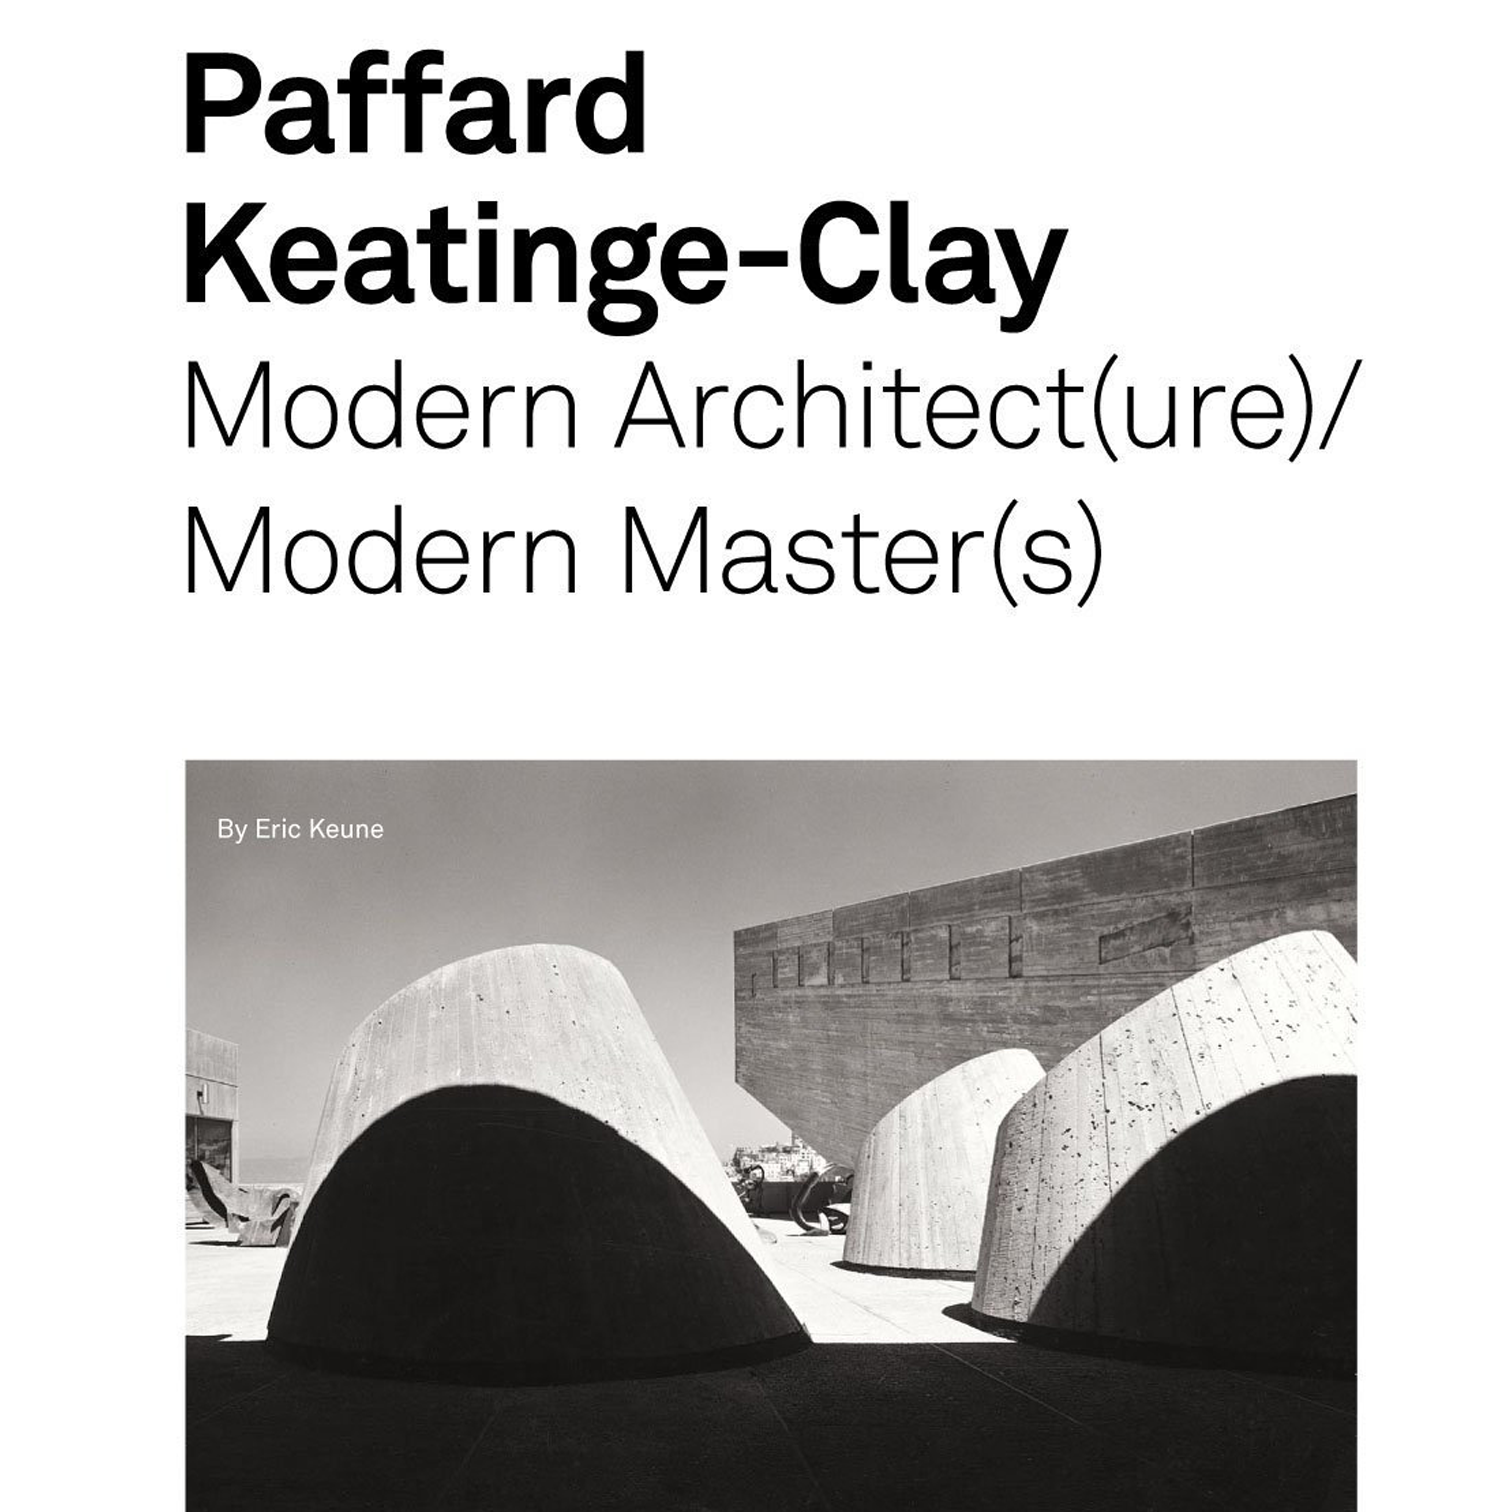 Paffard Keatinge-Clay